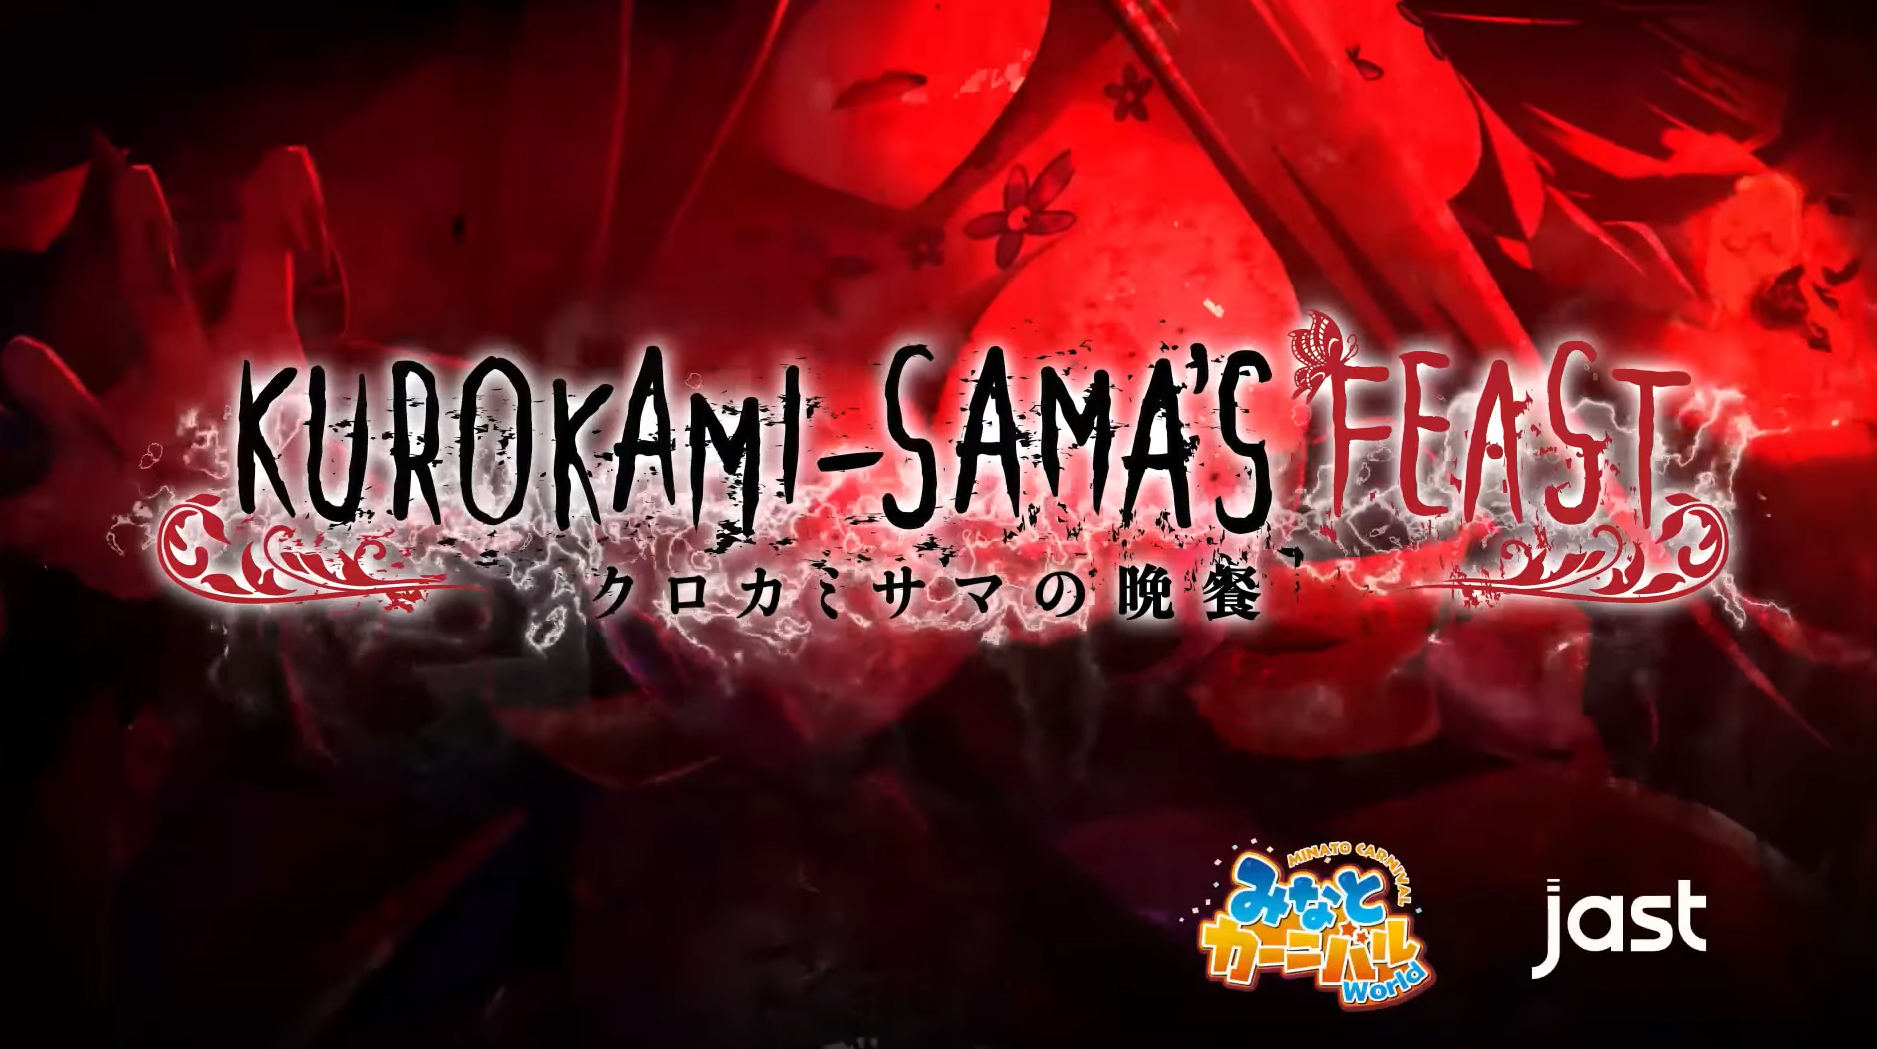 How long is Kurokami-sama's Feast?